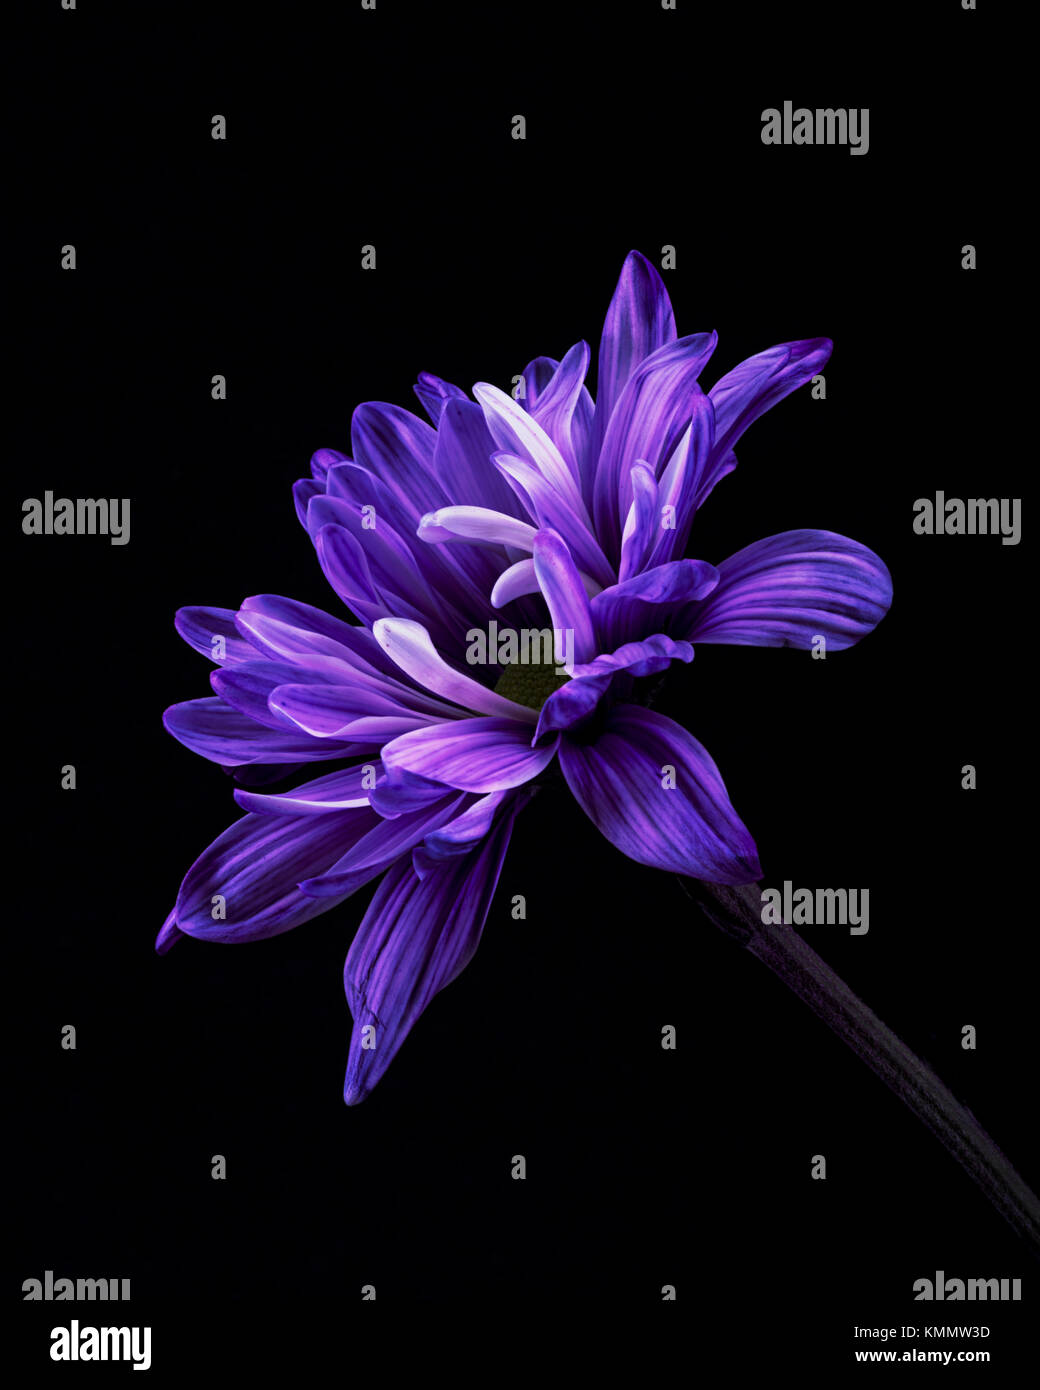 Single, Vivid, Bright Purple Flower on Plain Black Background Stock Photo